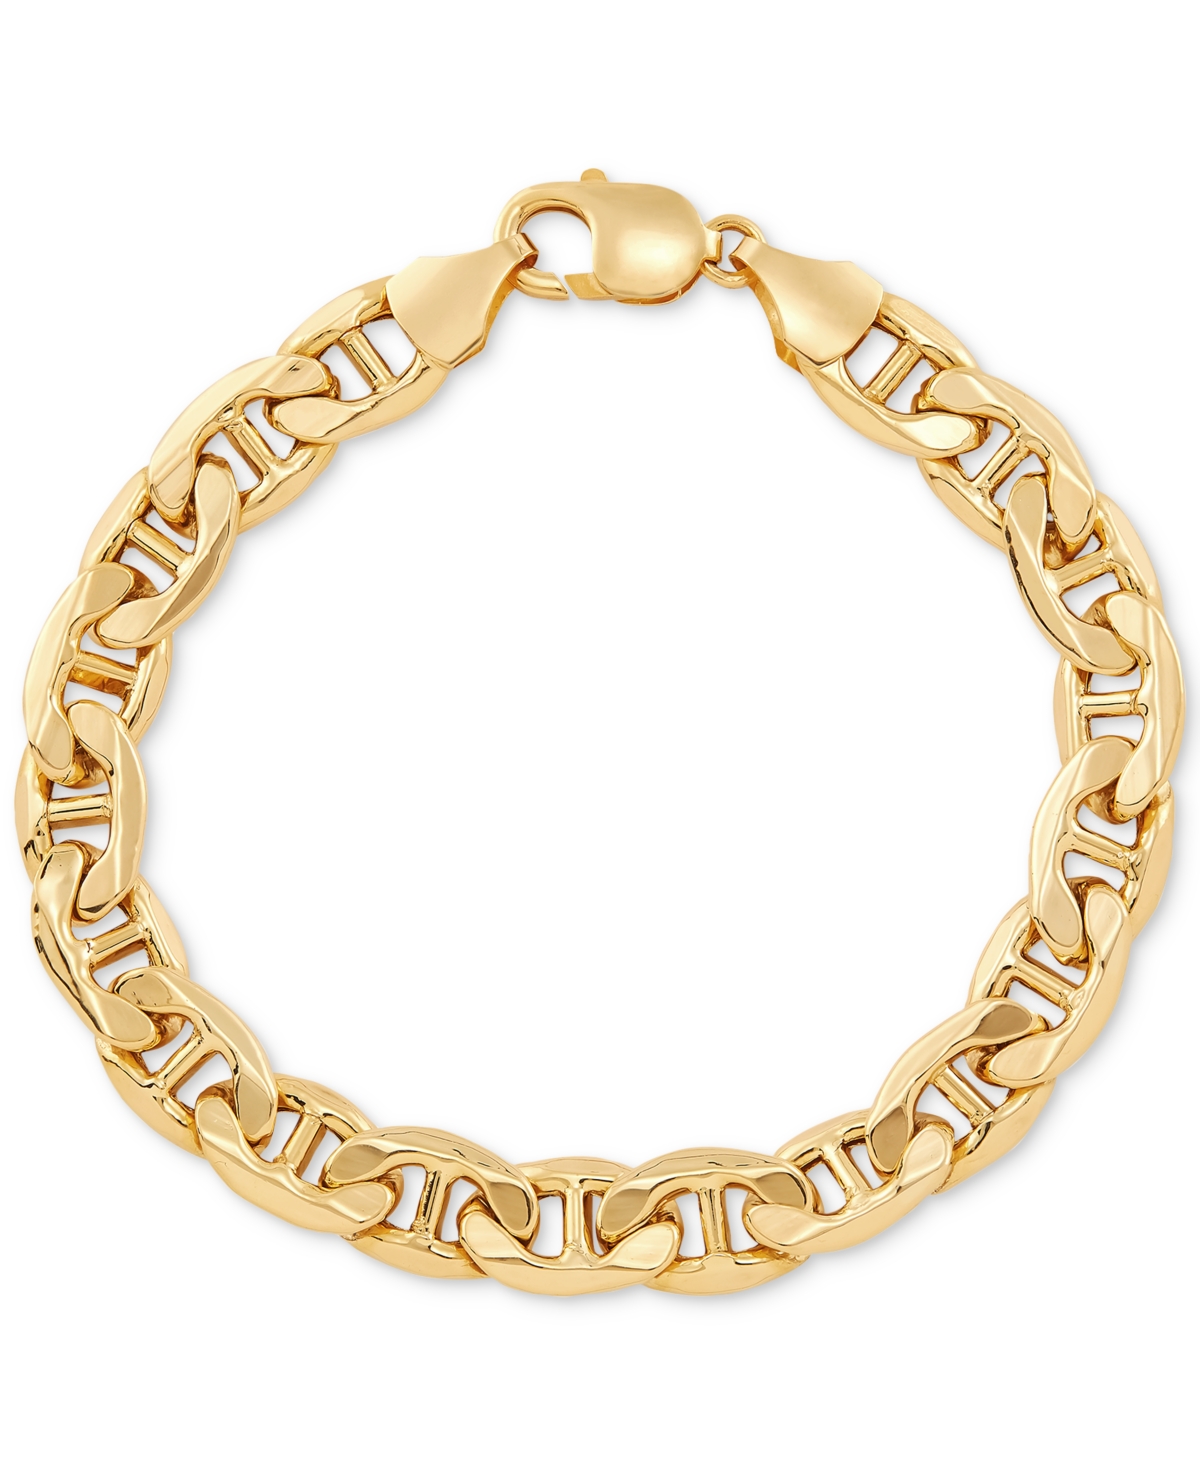 Men's Mariner Link Chain Bracelet in 10k Gold - Gold